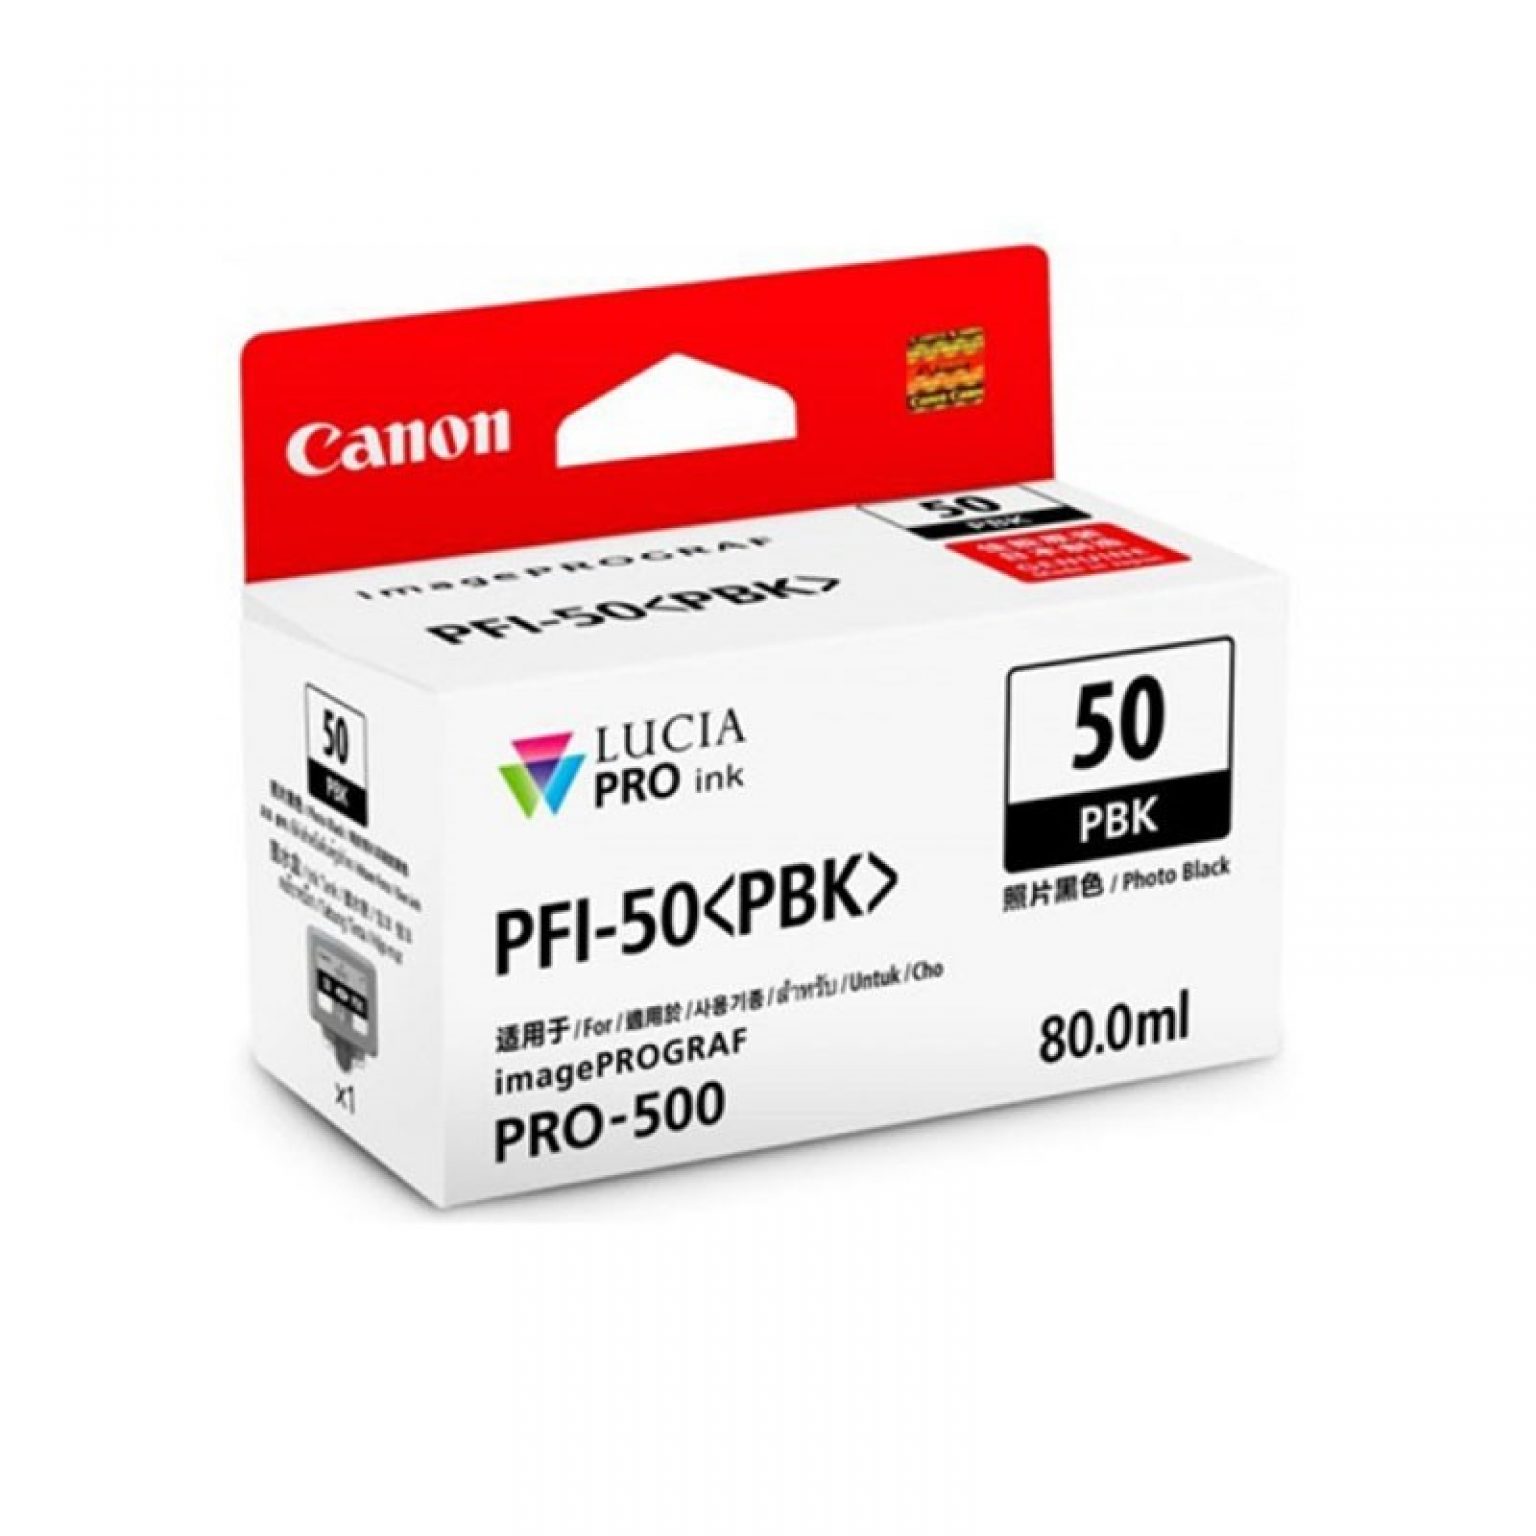 CANON - Ink PFI-50 Photo Black for Pro500 [PFI-50PBK]